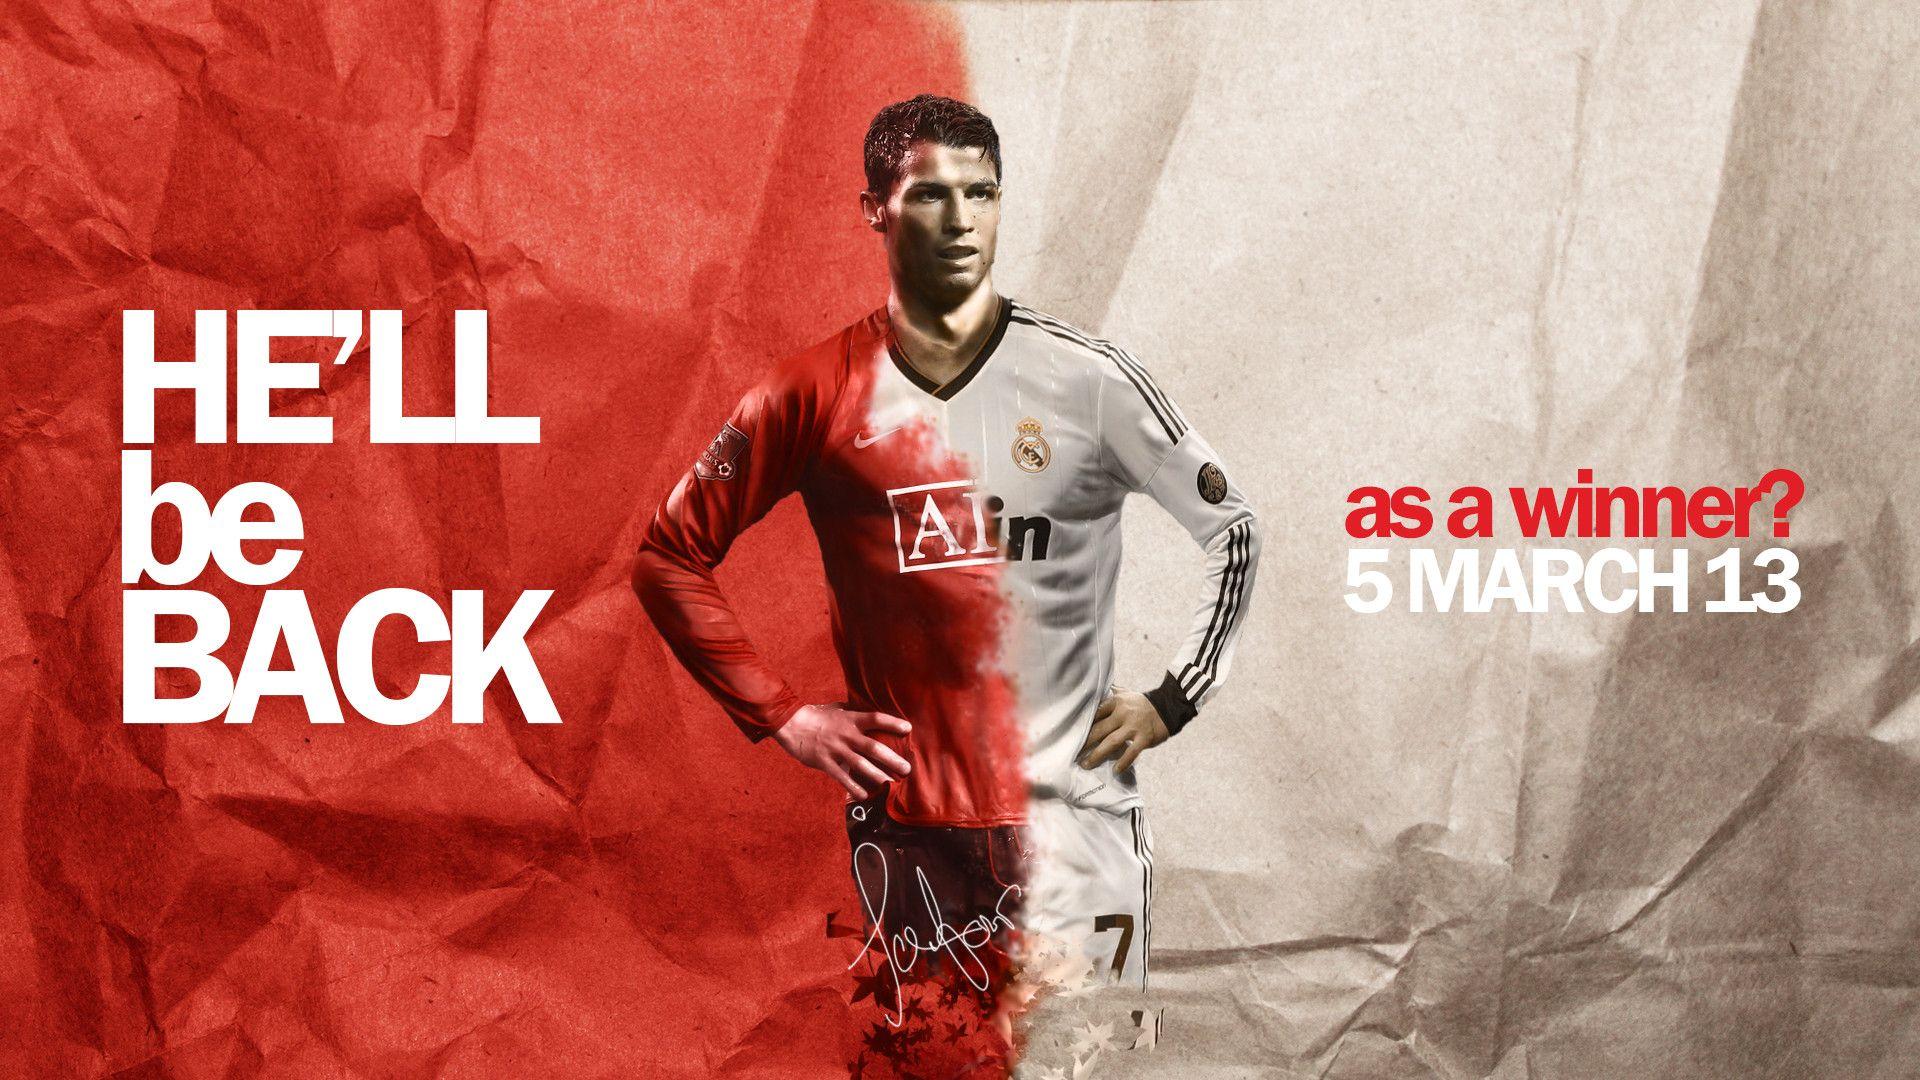 Cristiano Ronaldo HD Wallpaper And Image Free Download (8)